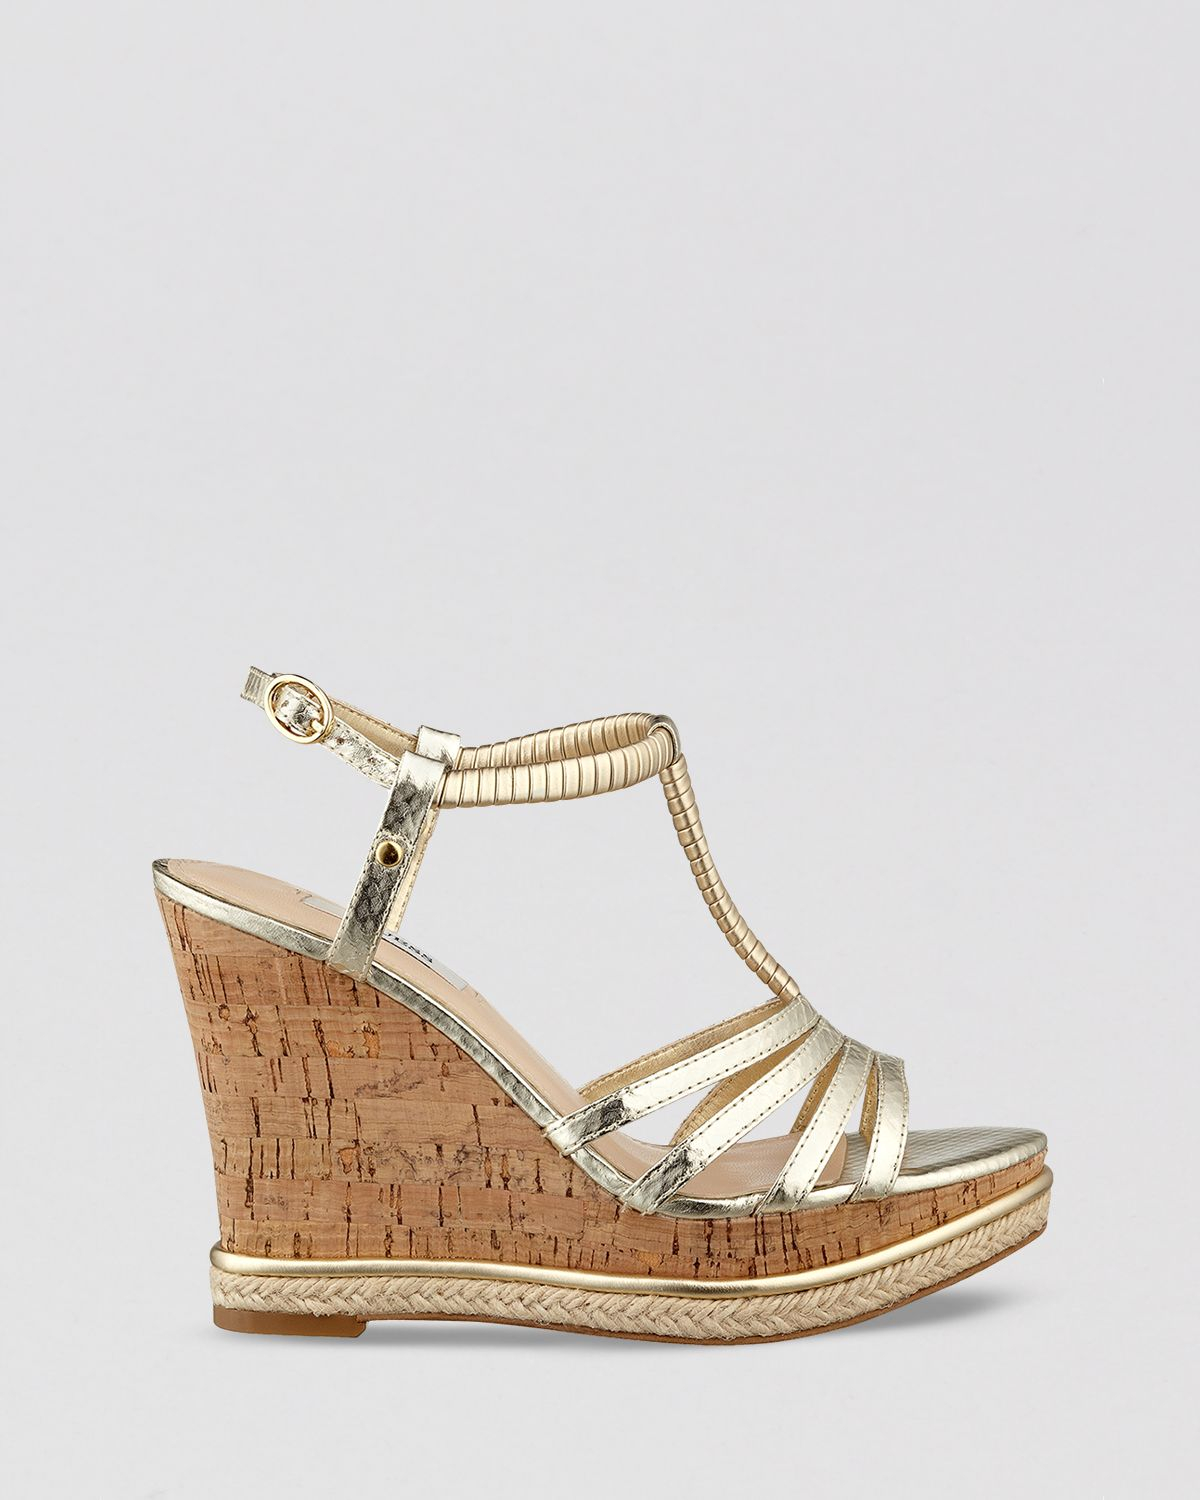 Guess Open Toe Platform Wedge Sandals Hilary in Gold (Metallic) - Lyst